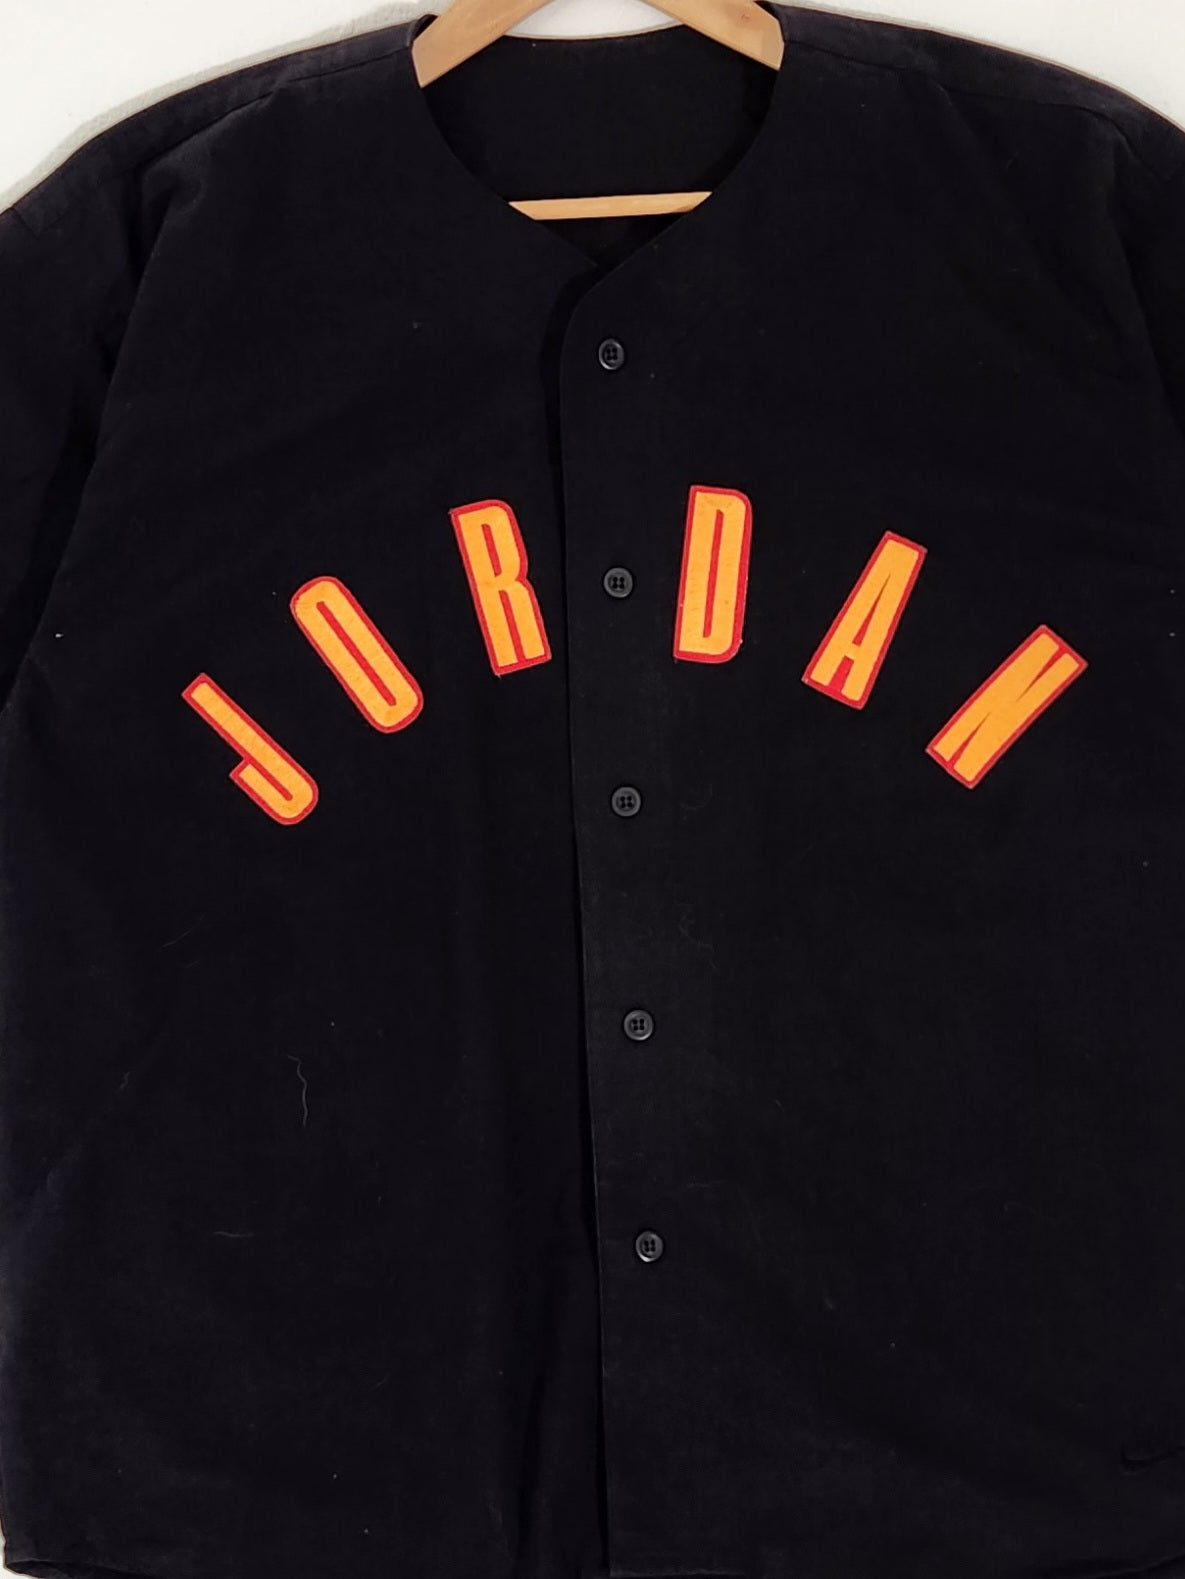 Vintage 1990s NIKE Michael Jordan Spelled Out Black Baseball Jersey Sz